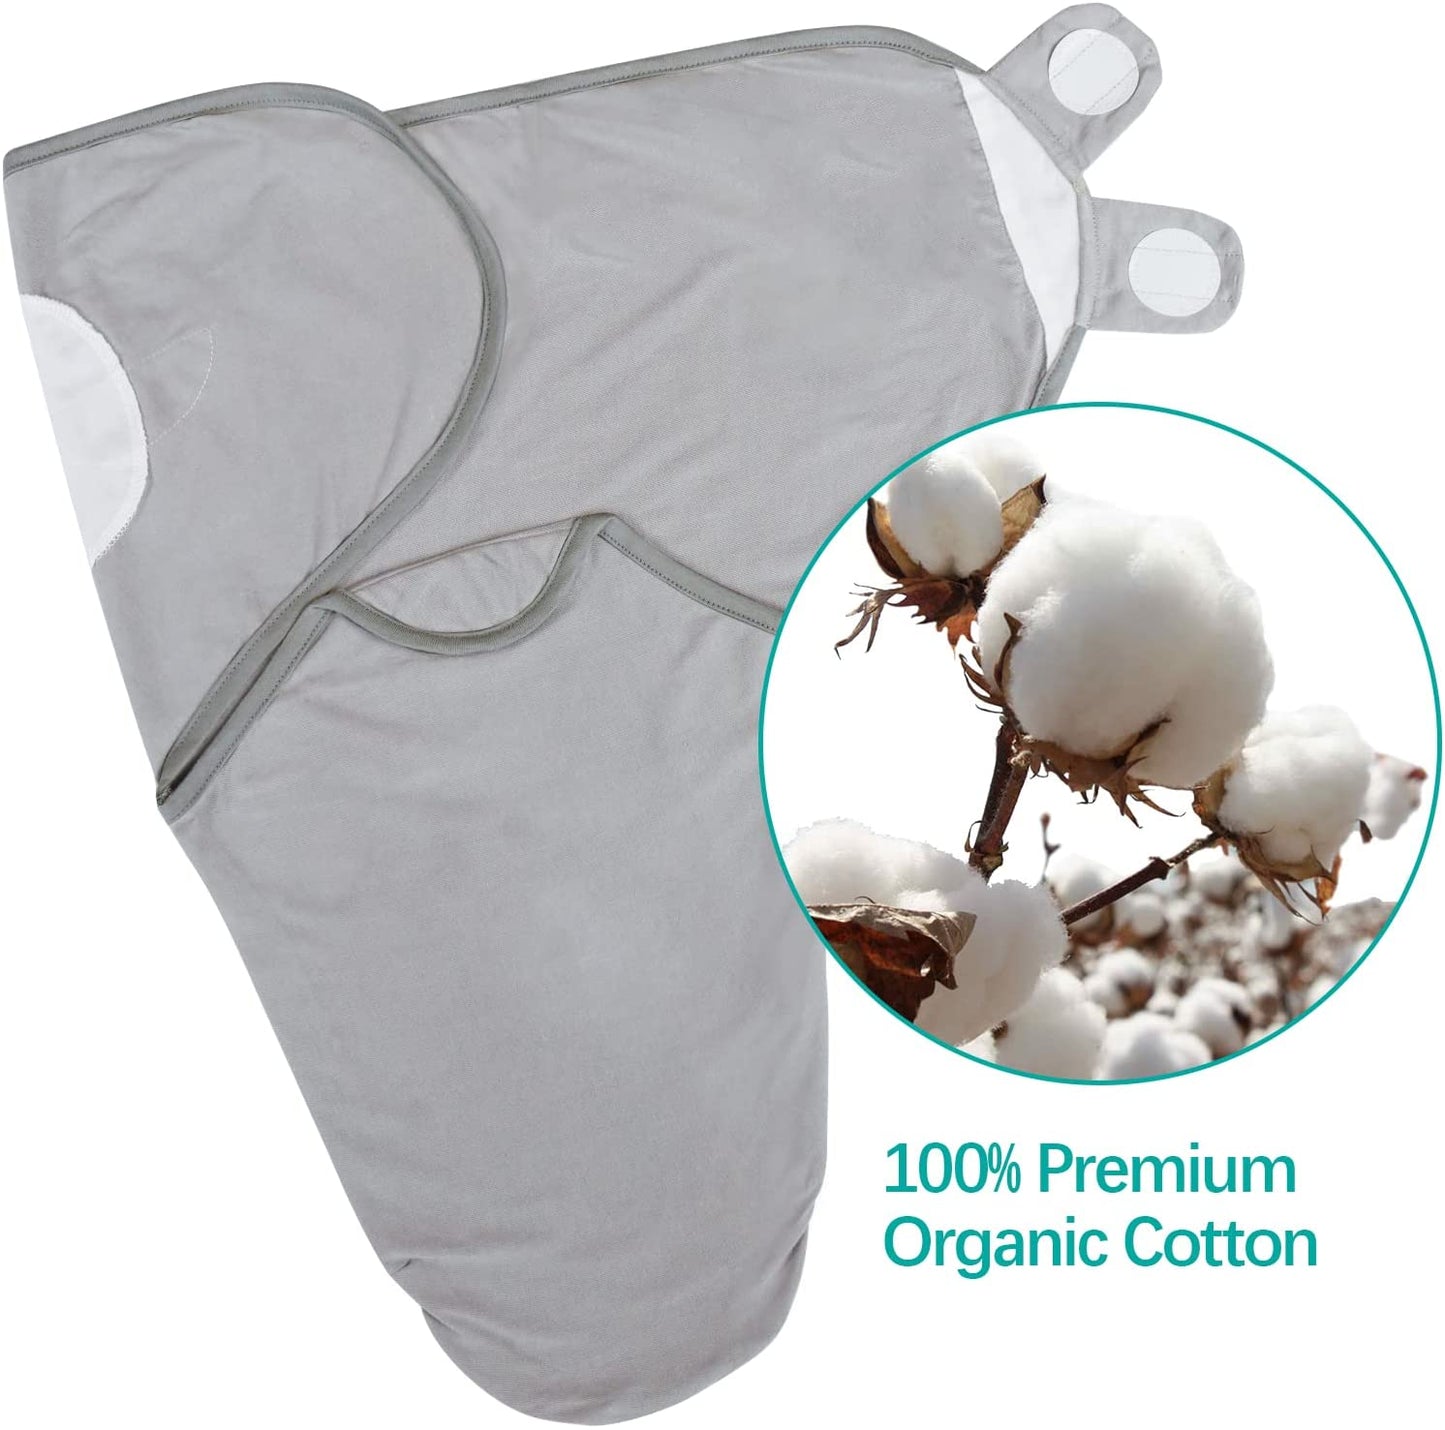 Biloban Baby Swaddles 3-6 Months, 100% Organic Cotton, Grey & White, 2 Pack